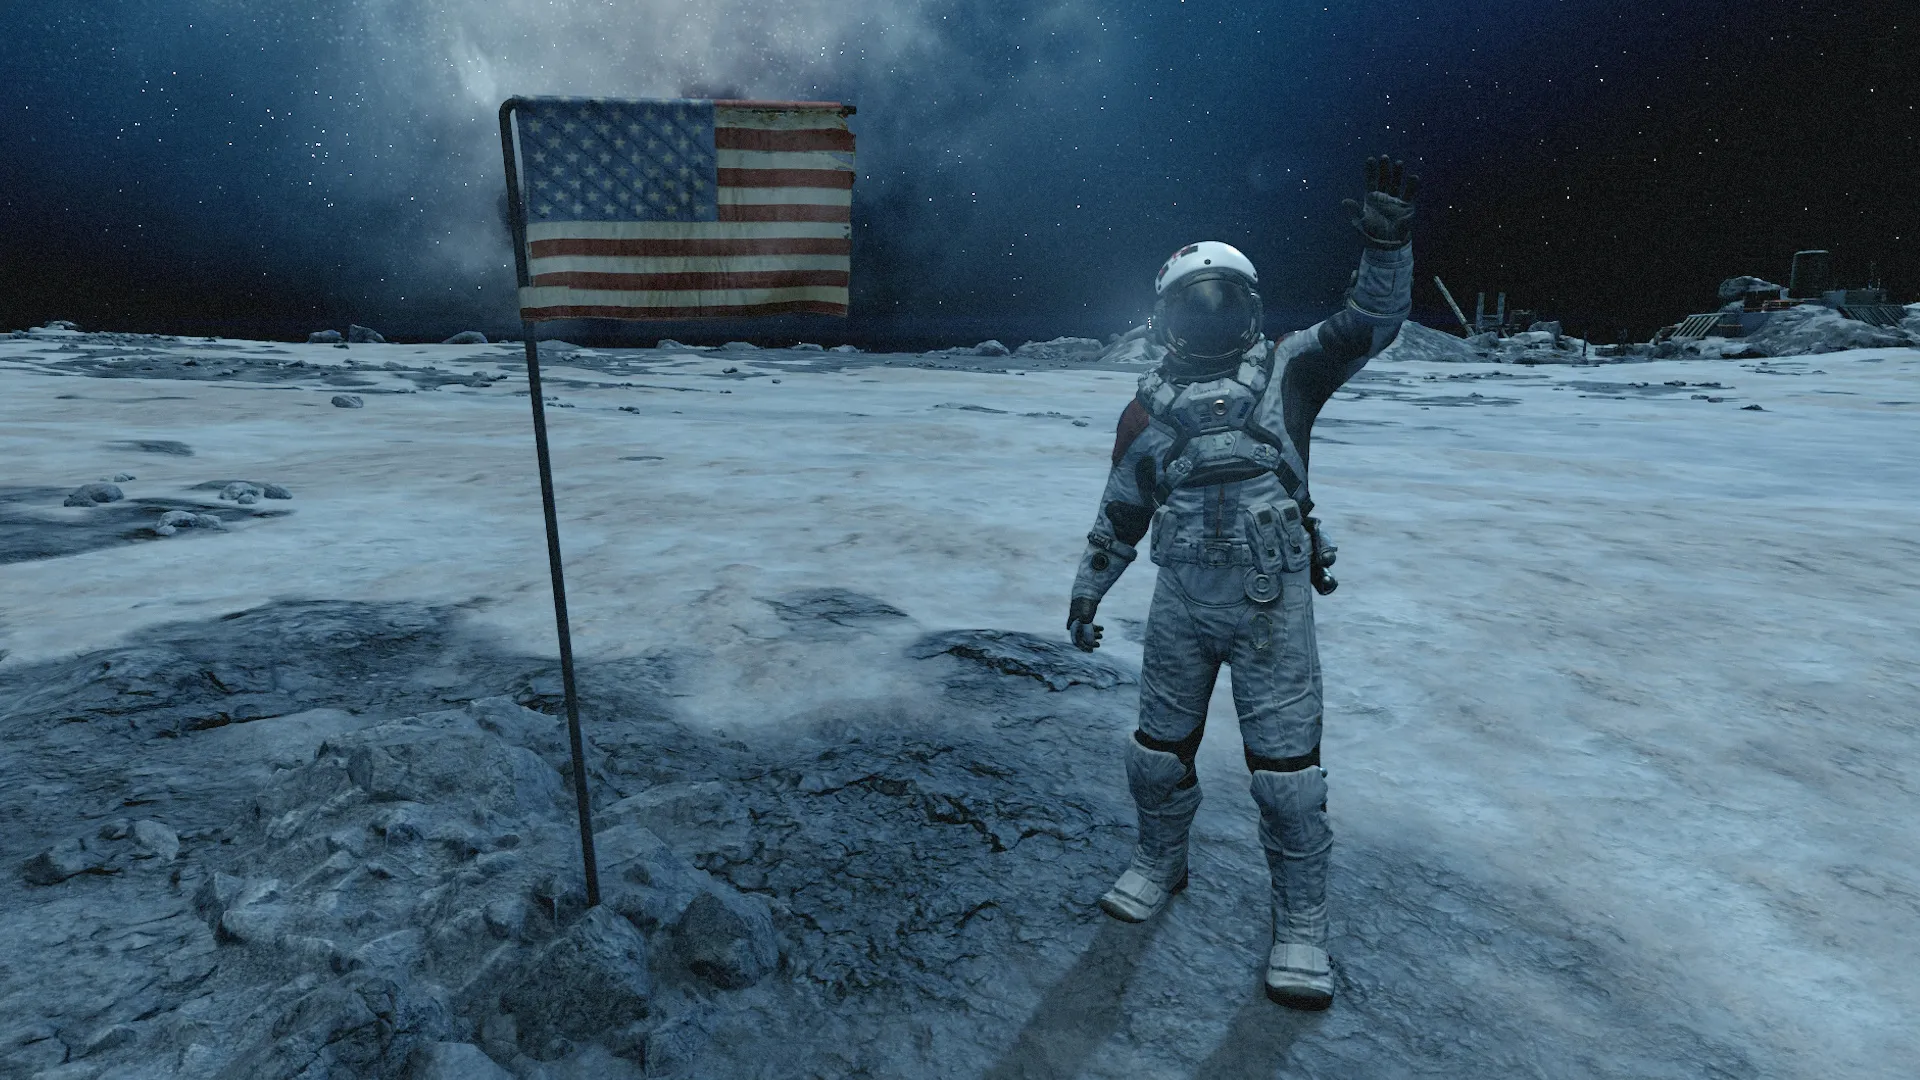 Starfield apolo moon landing location